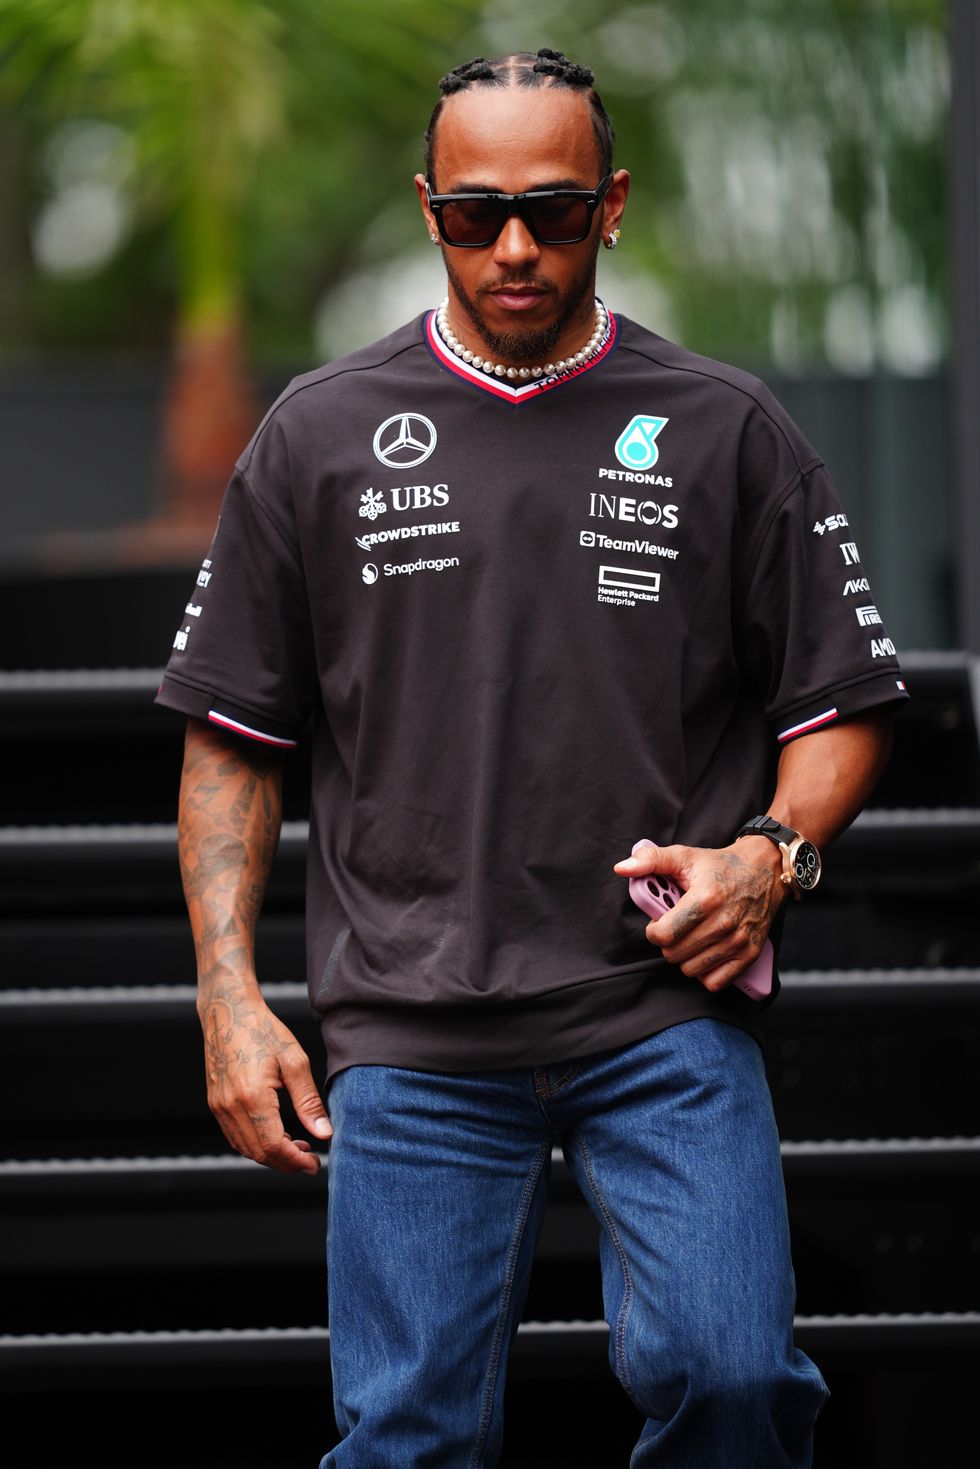 Lewis Hamilton qualified eighth